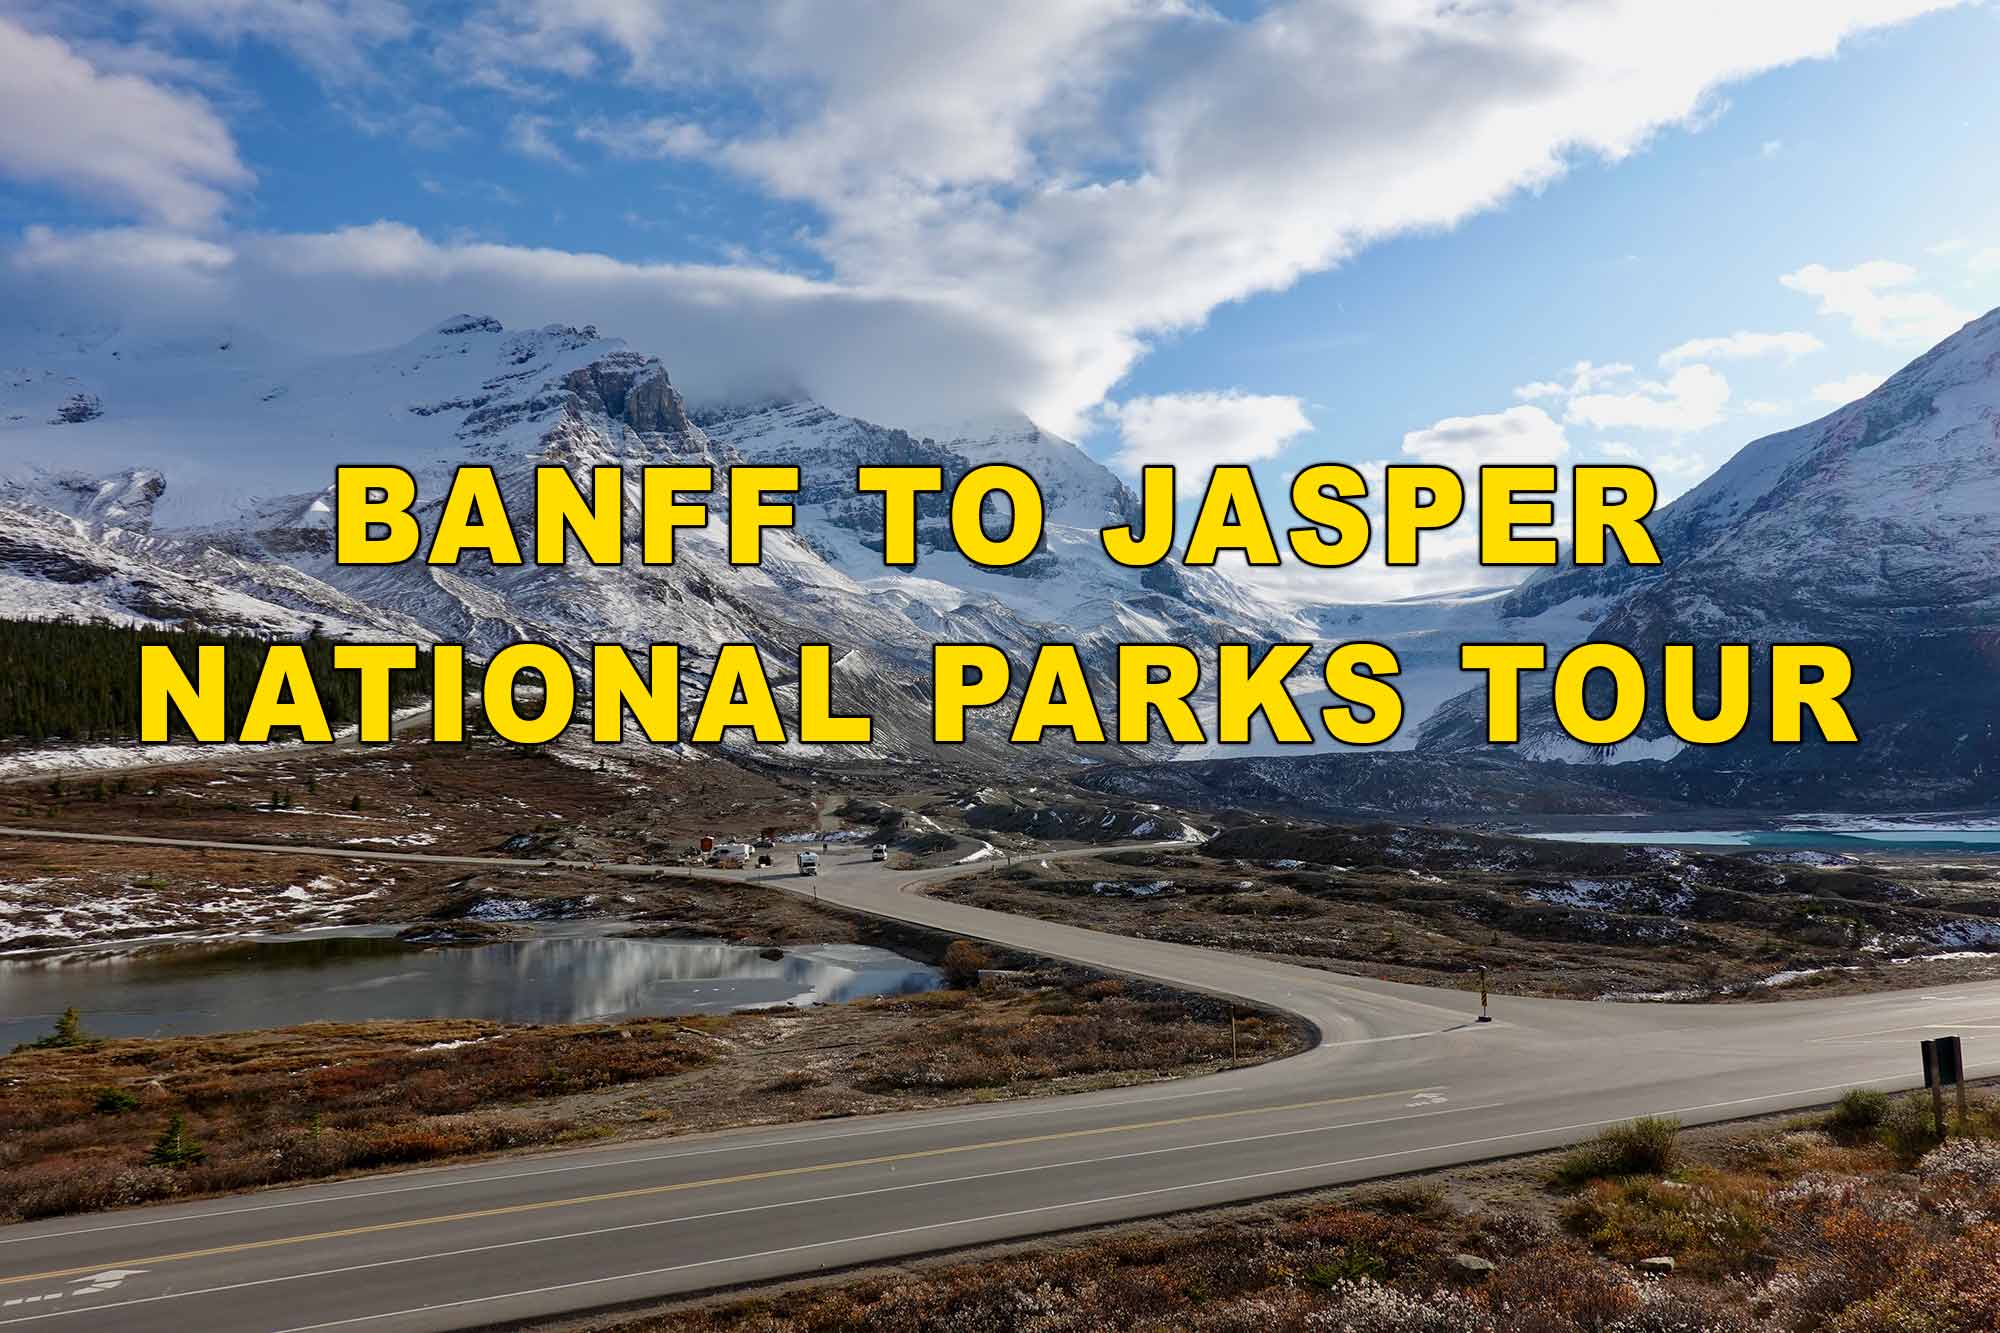 Banff to Jasper National Parks Tour